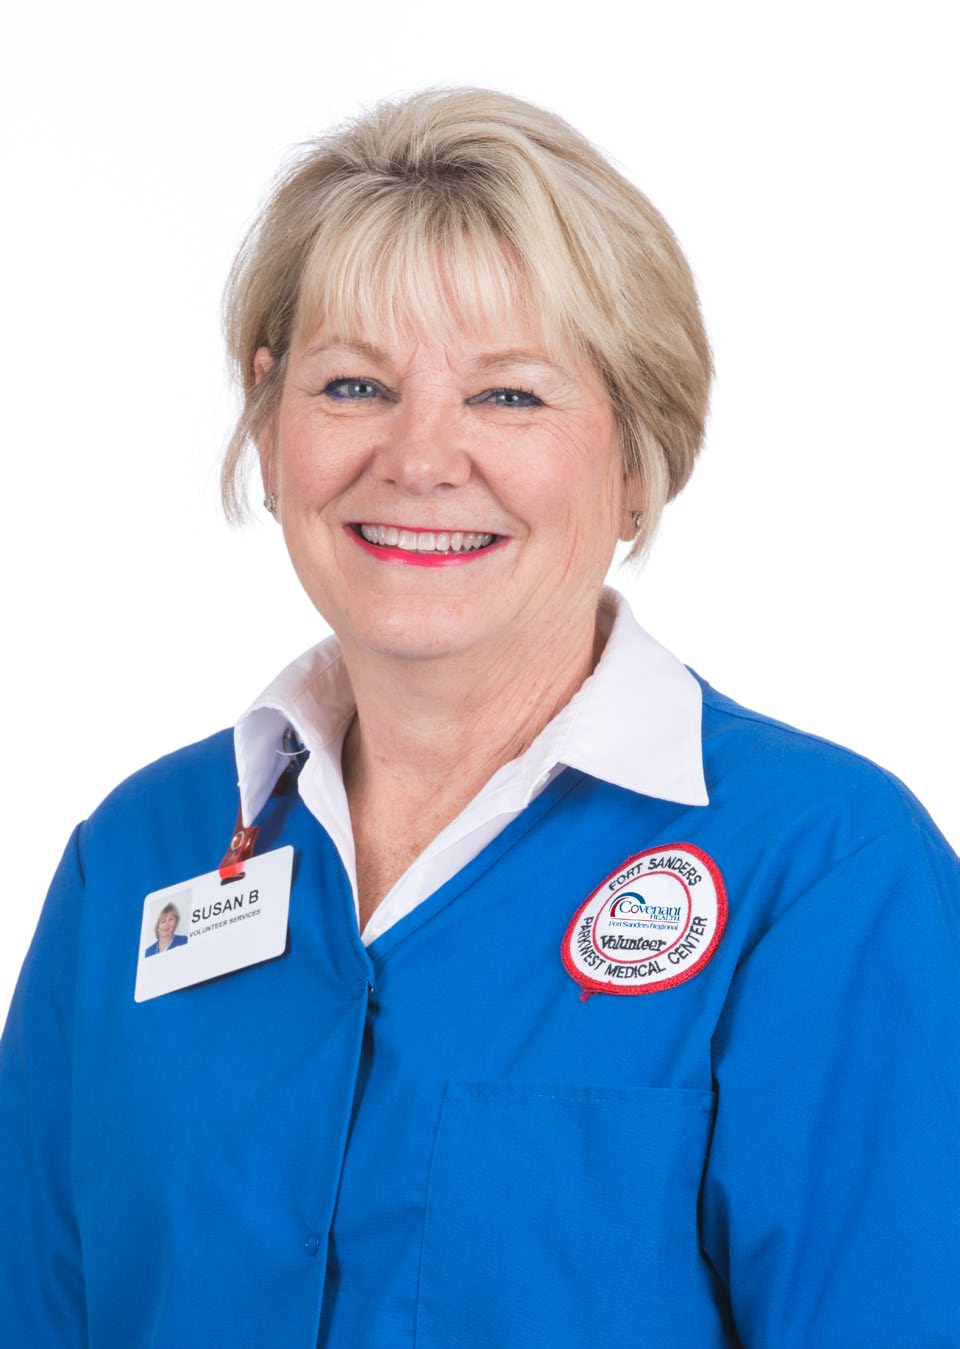 Headshot of Susan Brown smiling, wearing blue volunteer jacket.